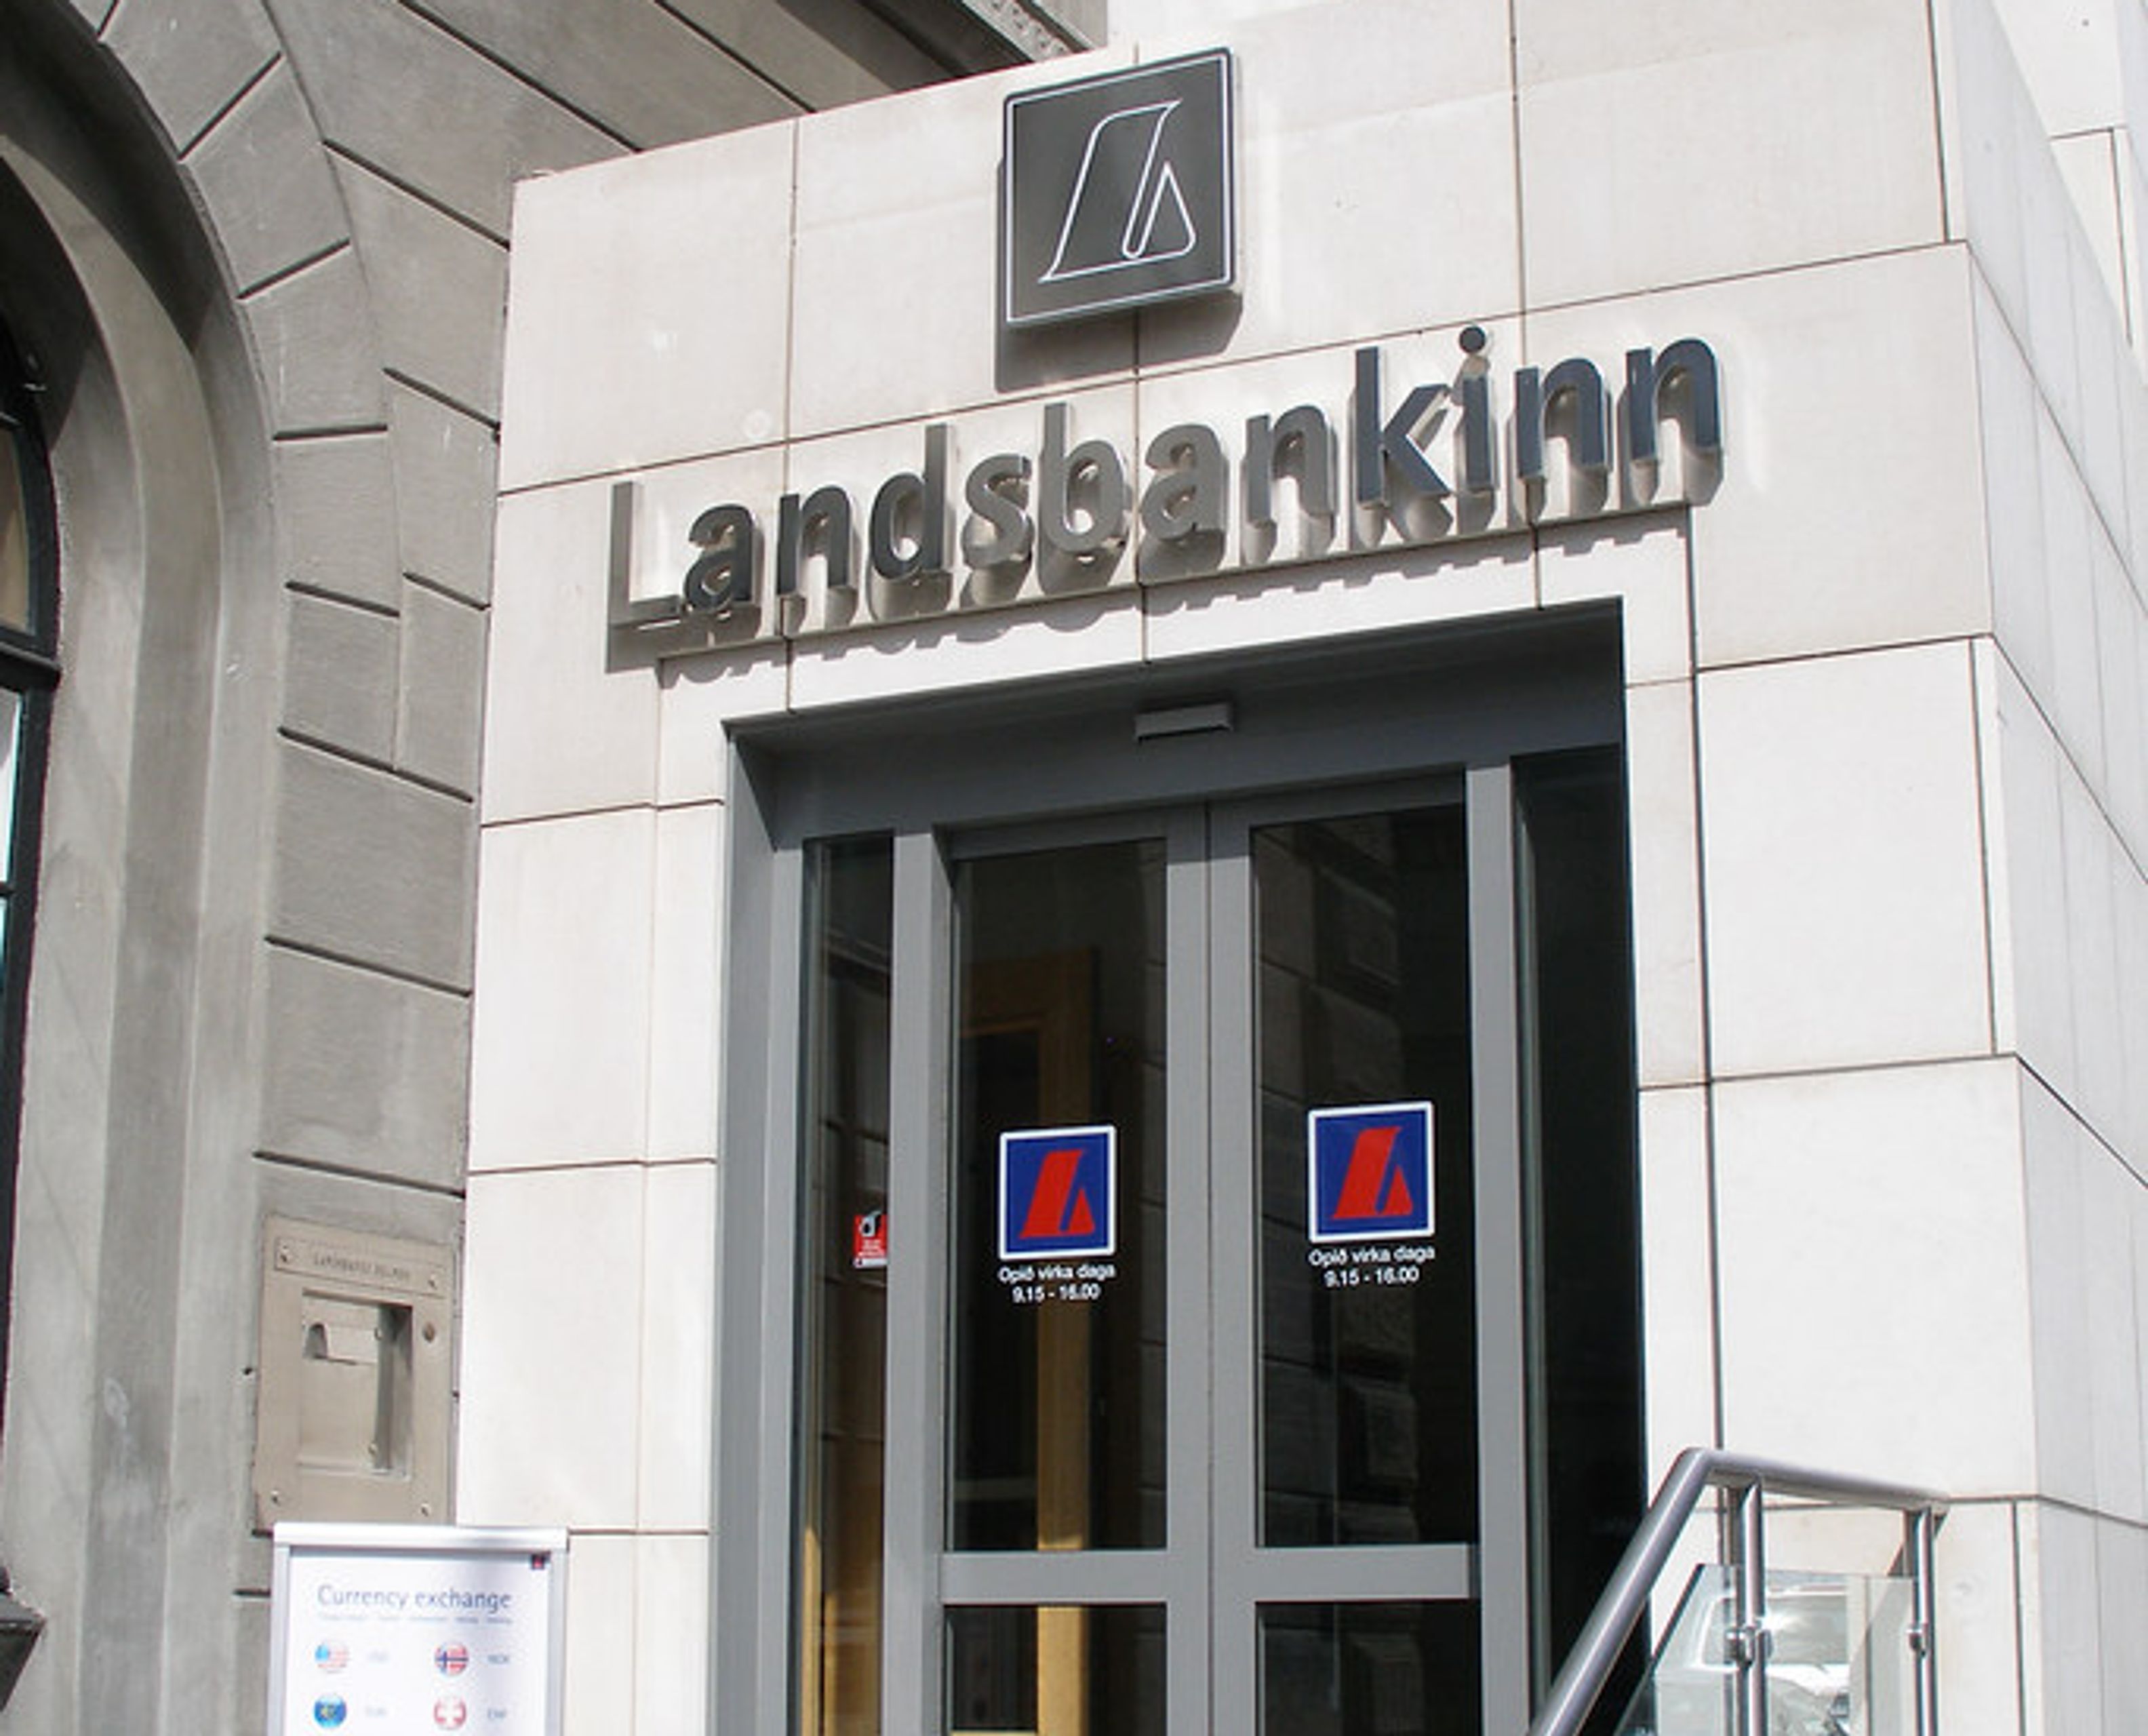 Entrance of Landsbankin in Iceland 